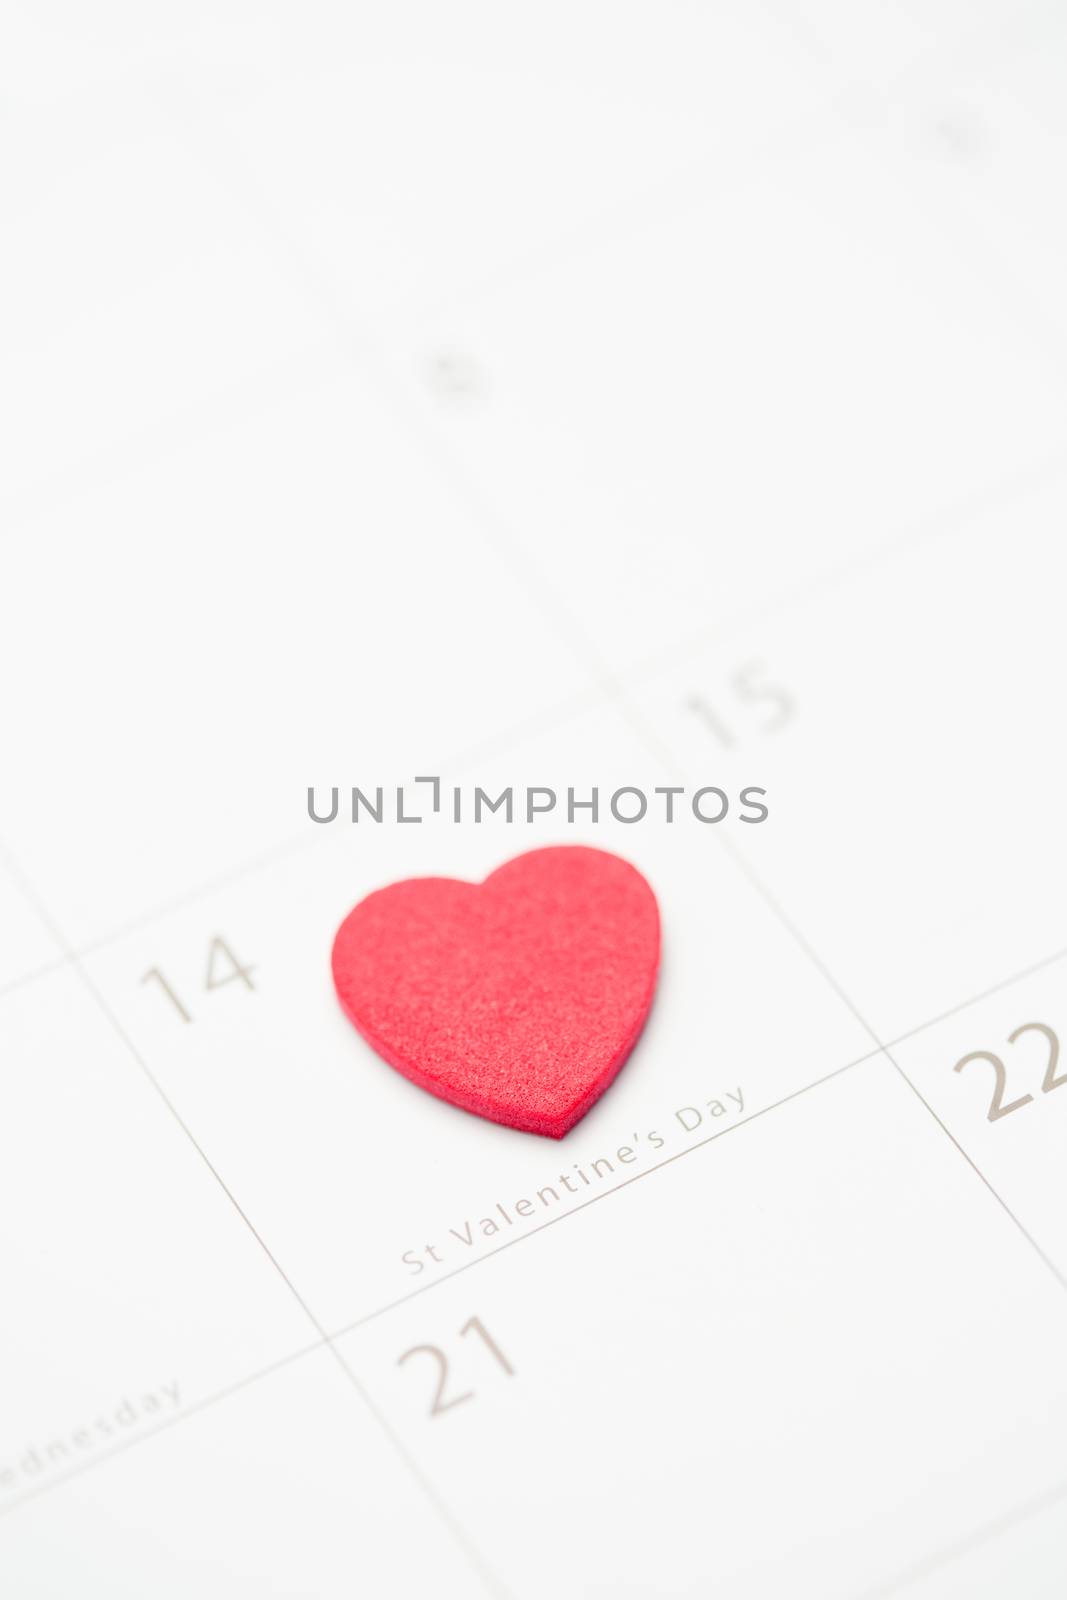 Pink heart marking valentines day by Wavebreakmedia